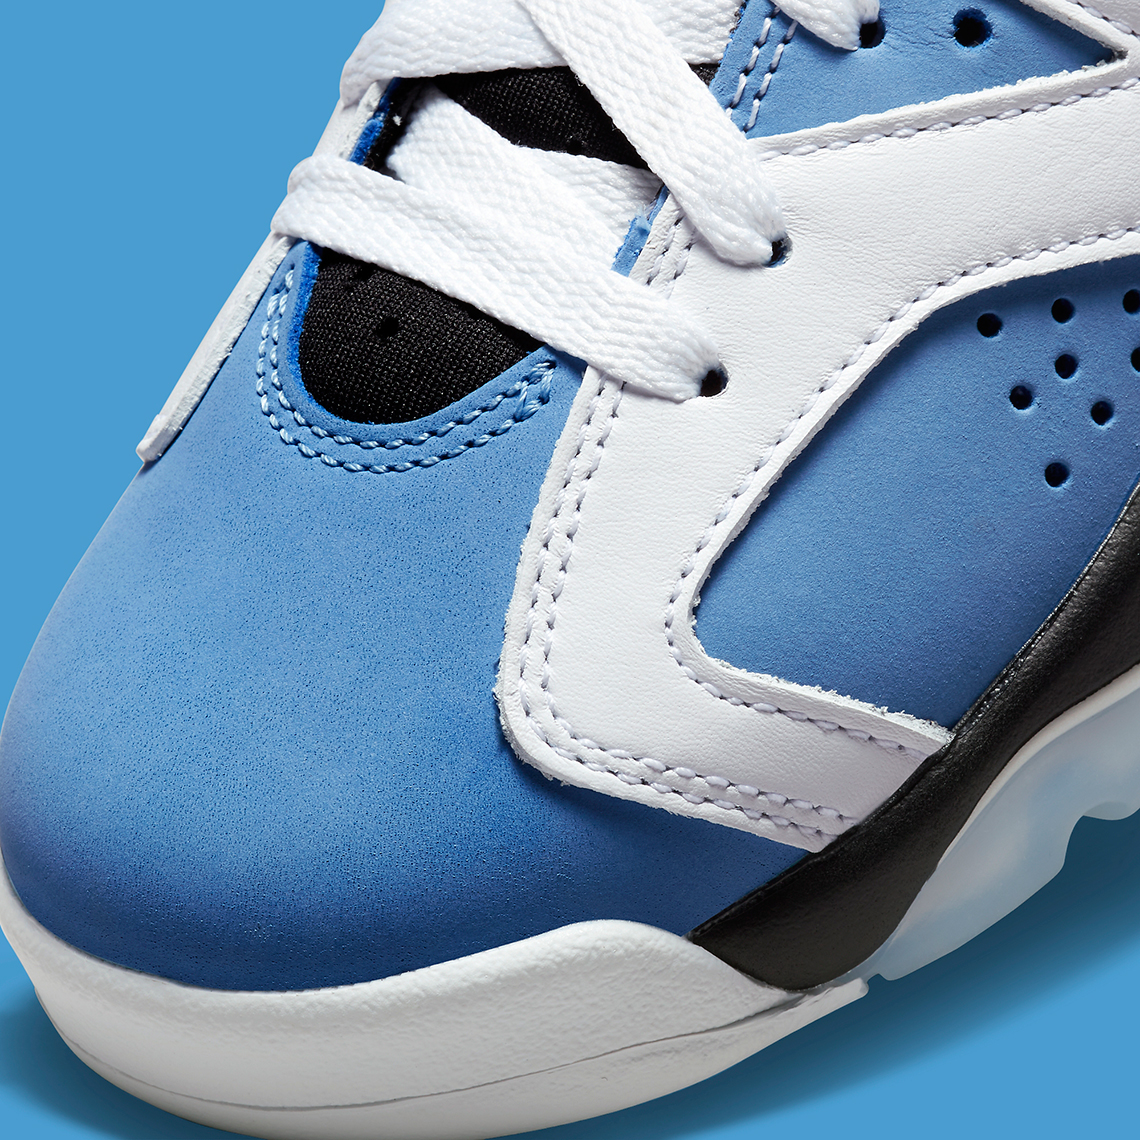 Nike Jordan Grind Re2pect Navy Grey-White Unc Gs 384665 410 8